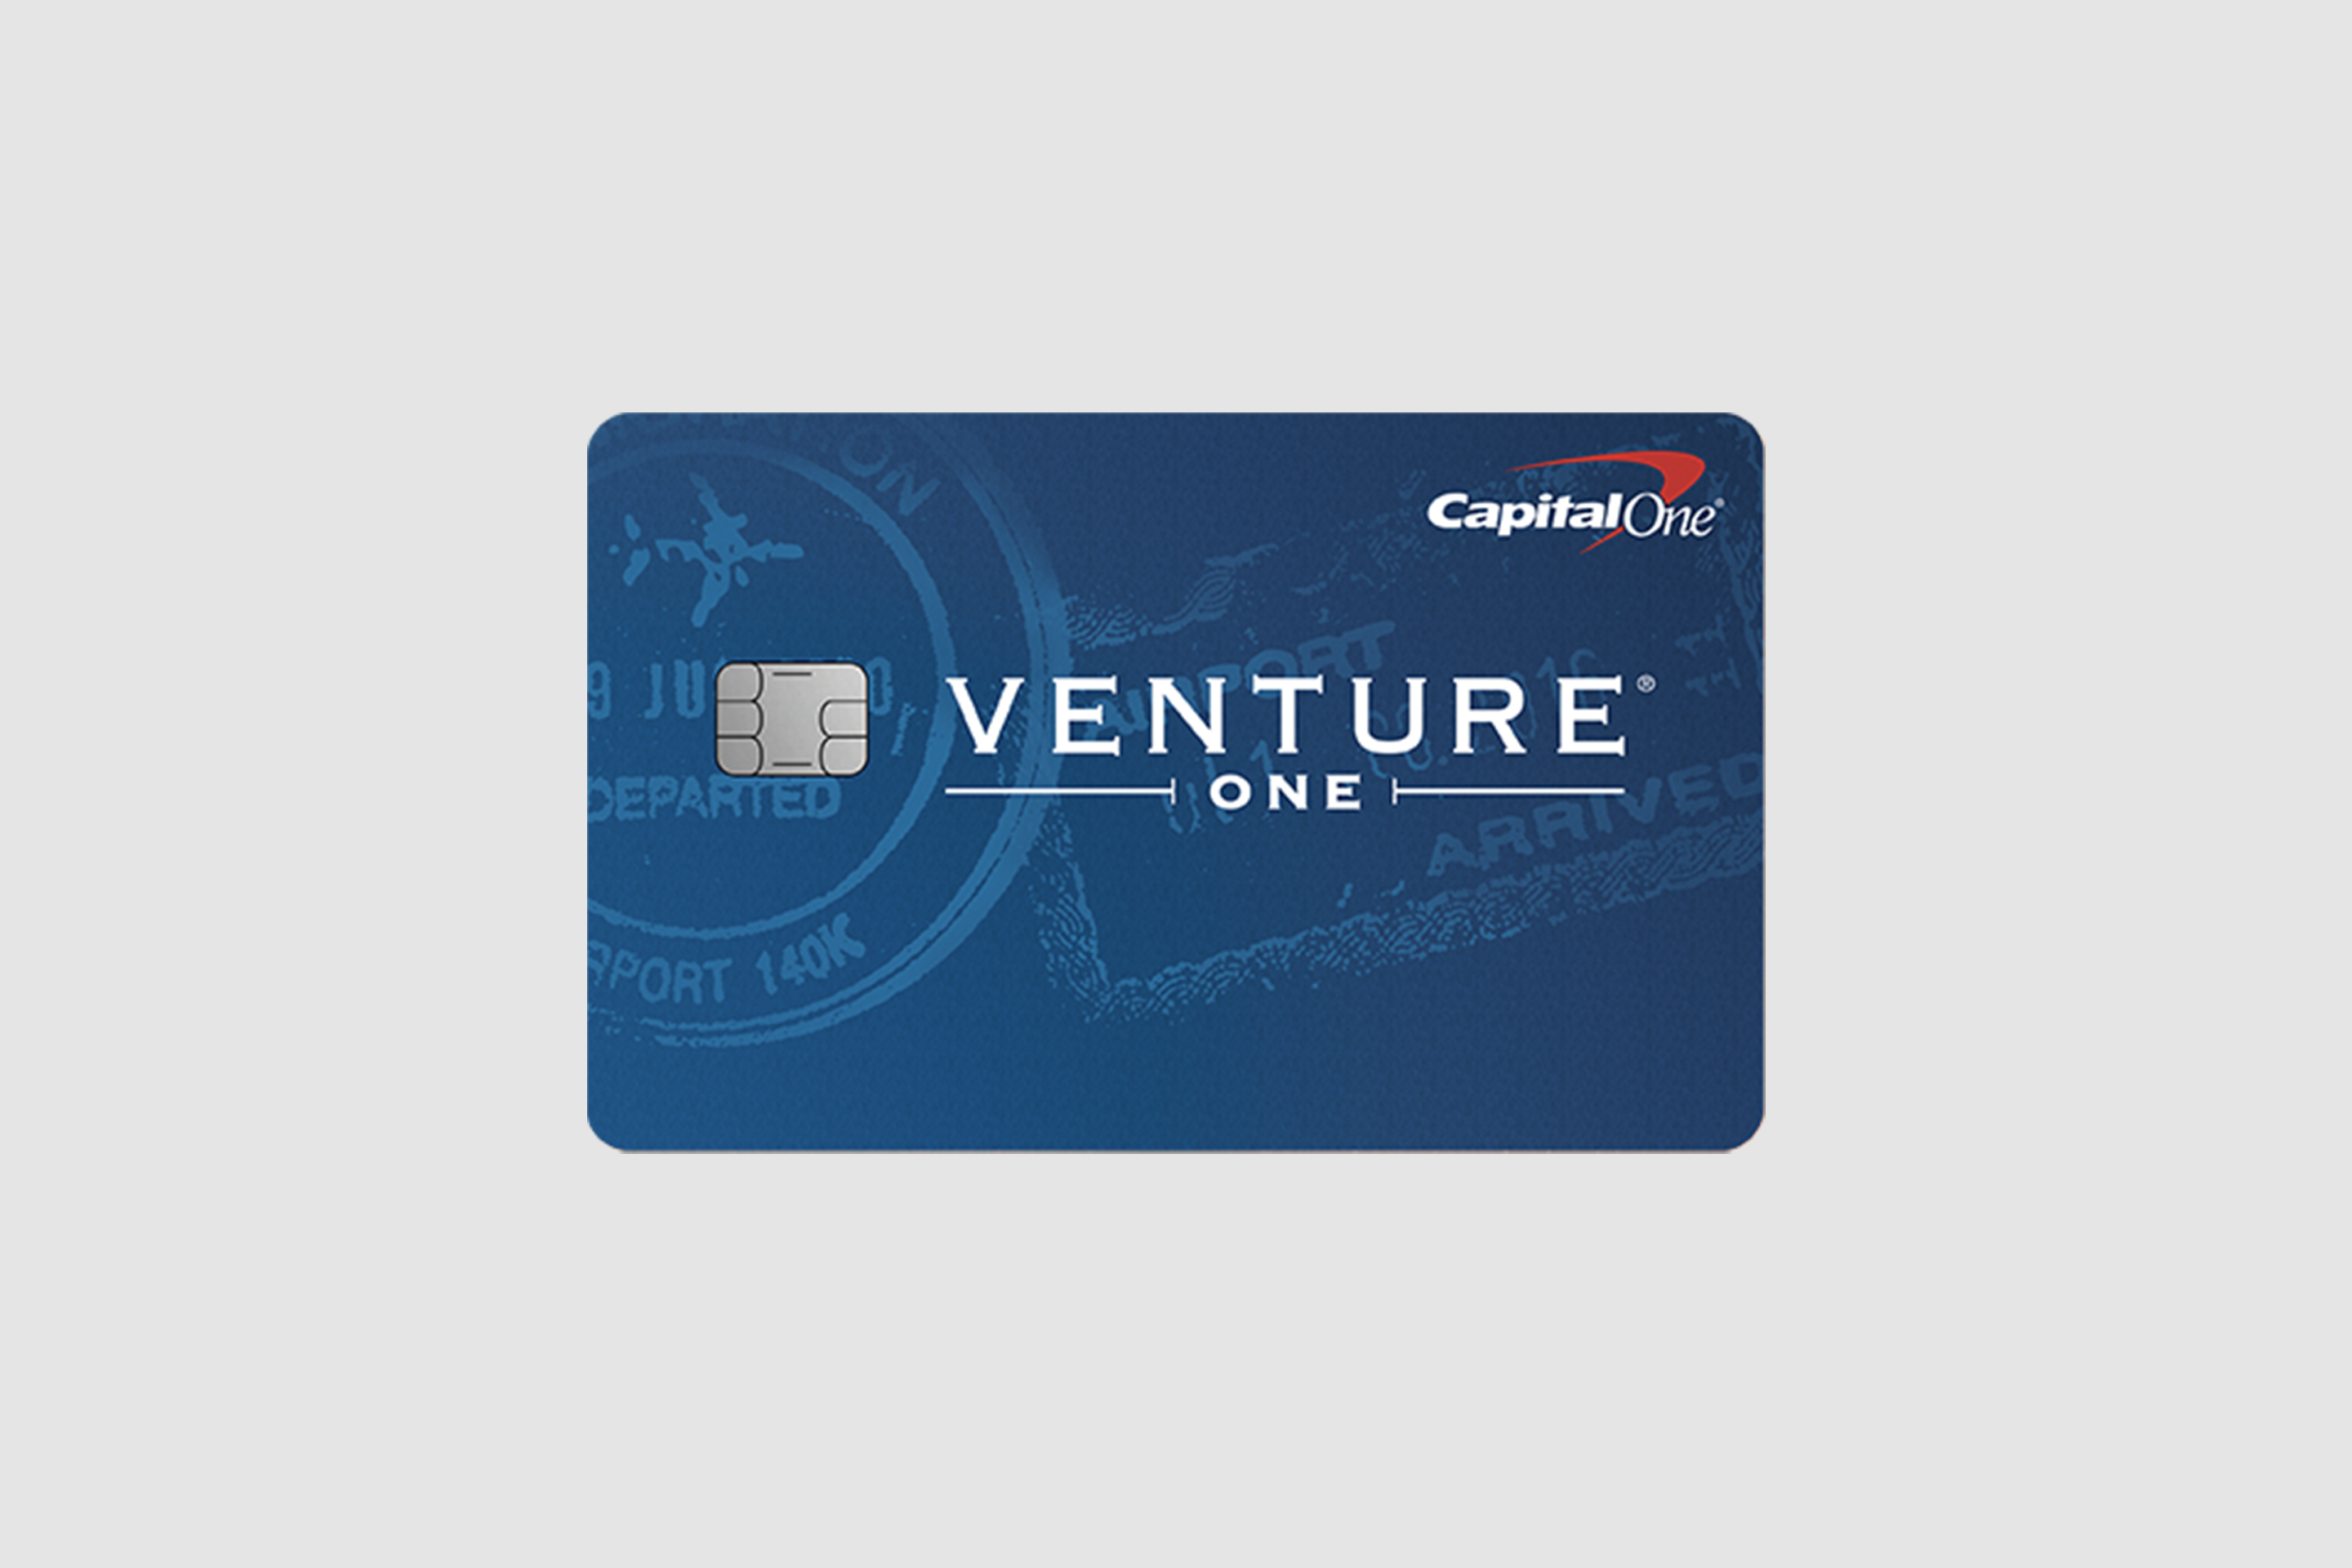 Capital One Venture One rewards Credit Card